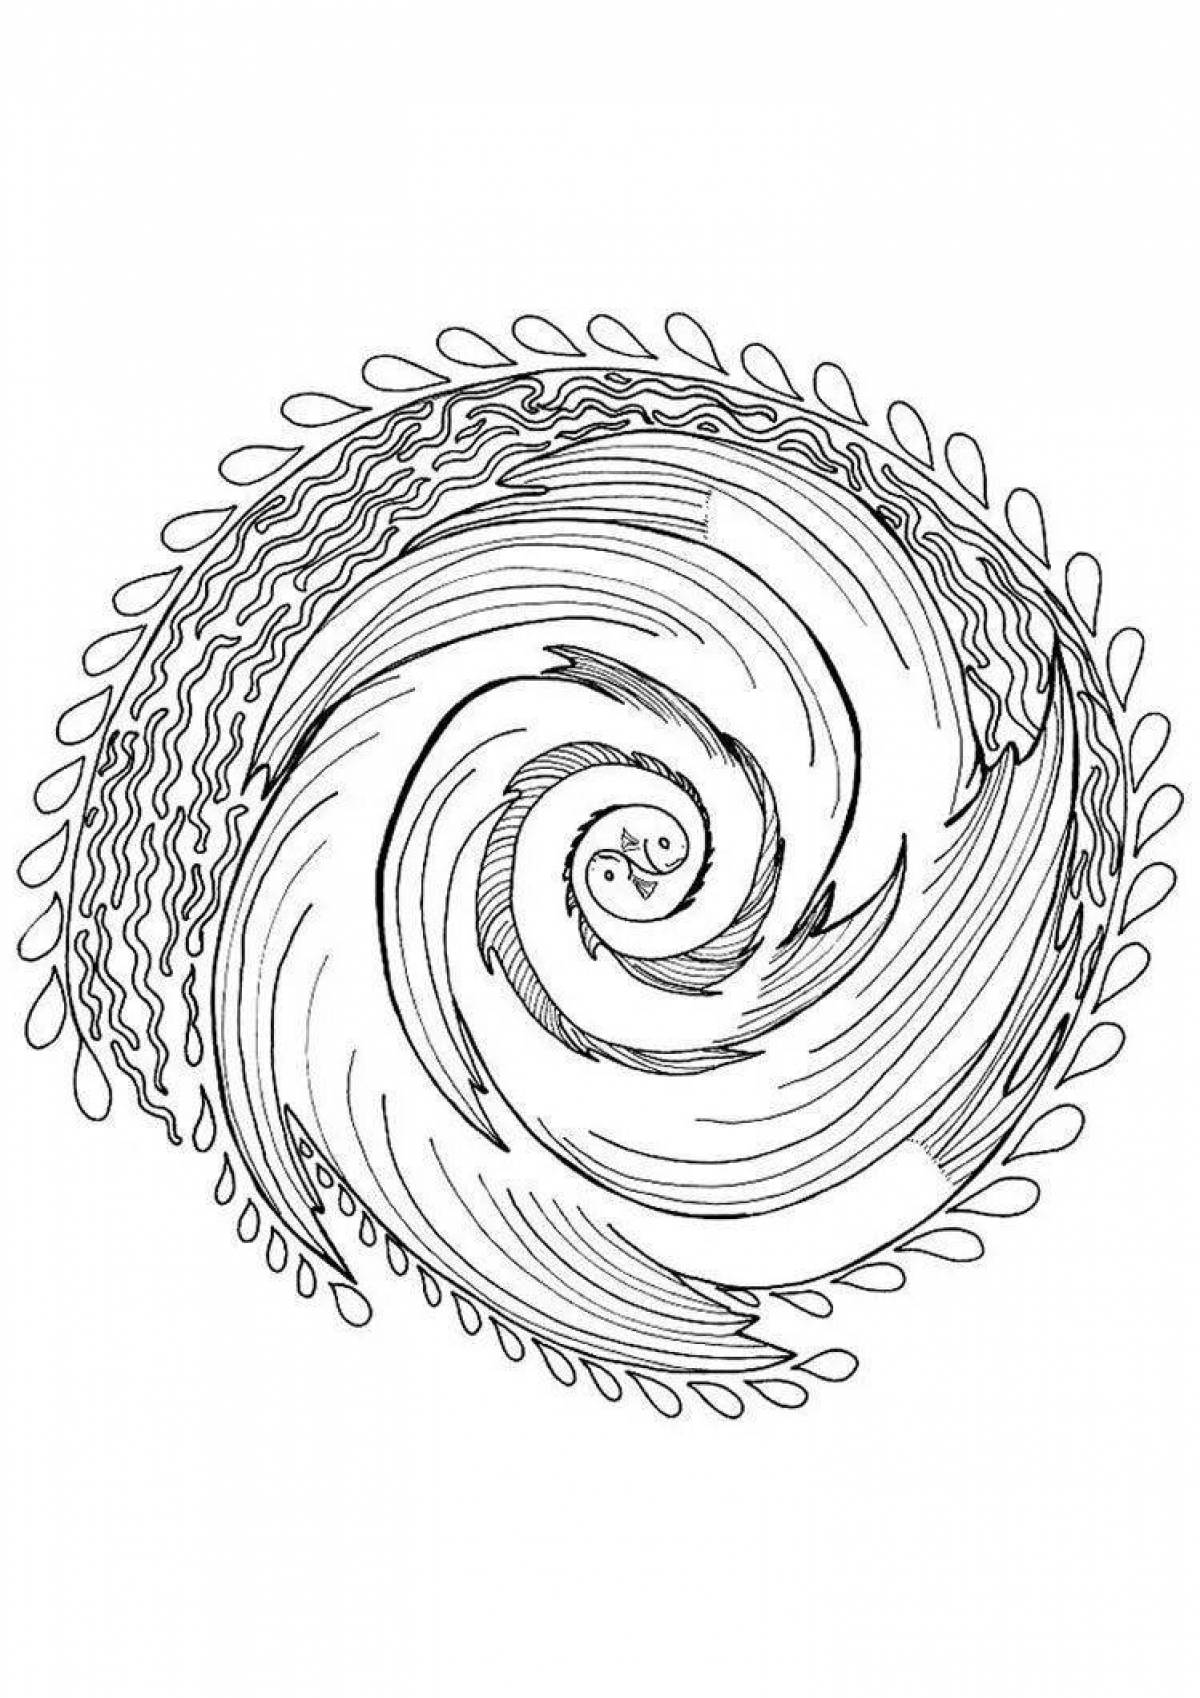 Exquisite circular pattern spiral coloring book